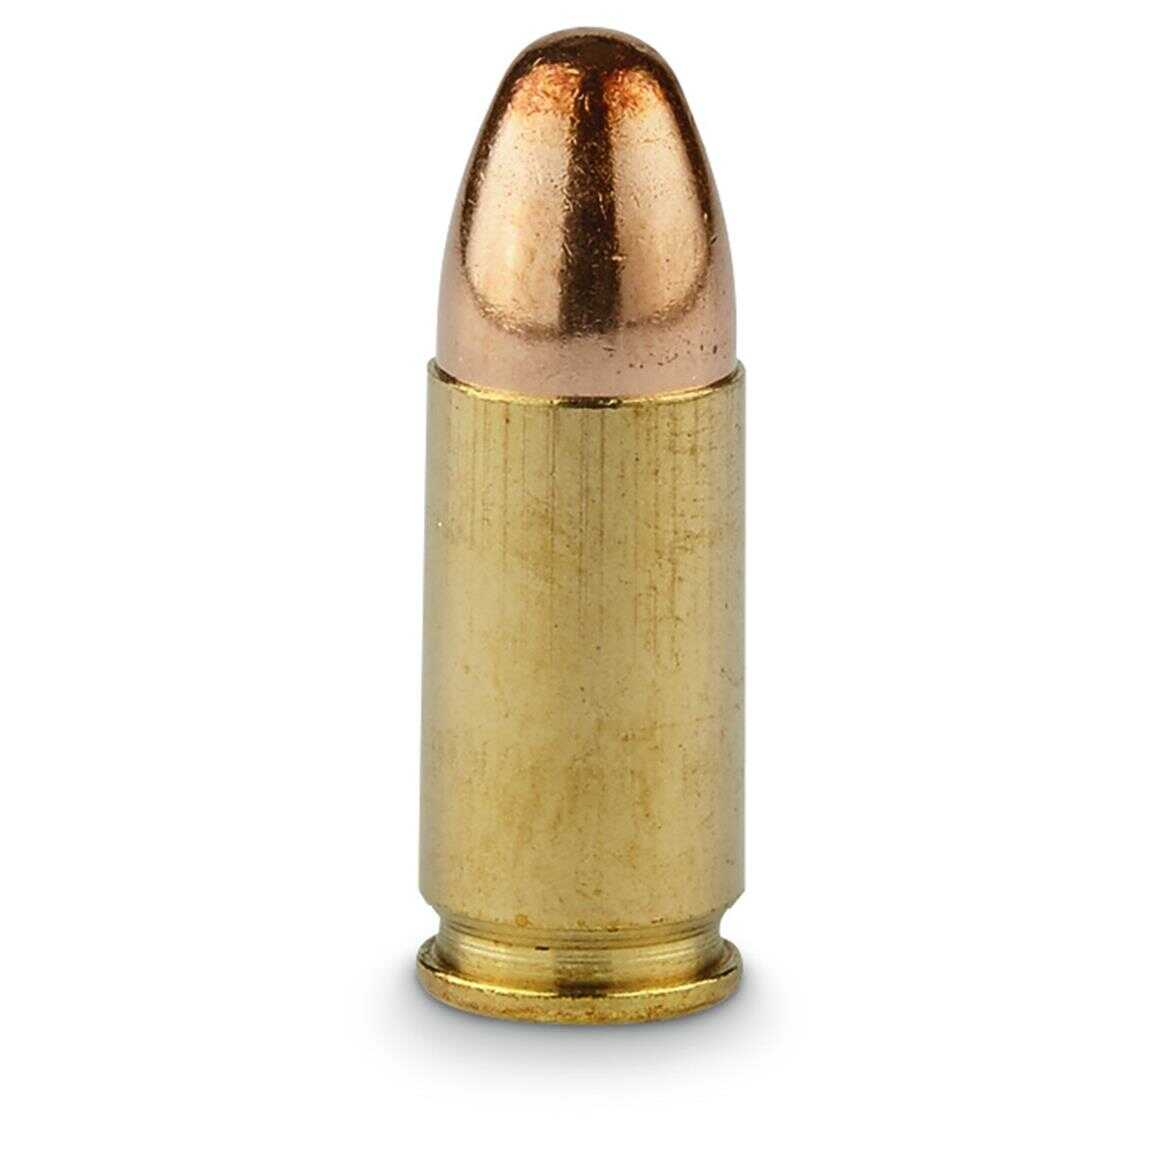 9mm Luger 50 Rounds Ammunition Prvi Partizan 124 Grain Full Metal Case